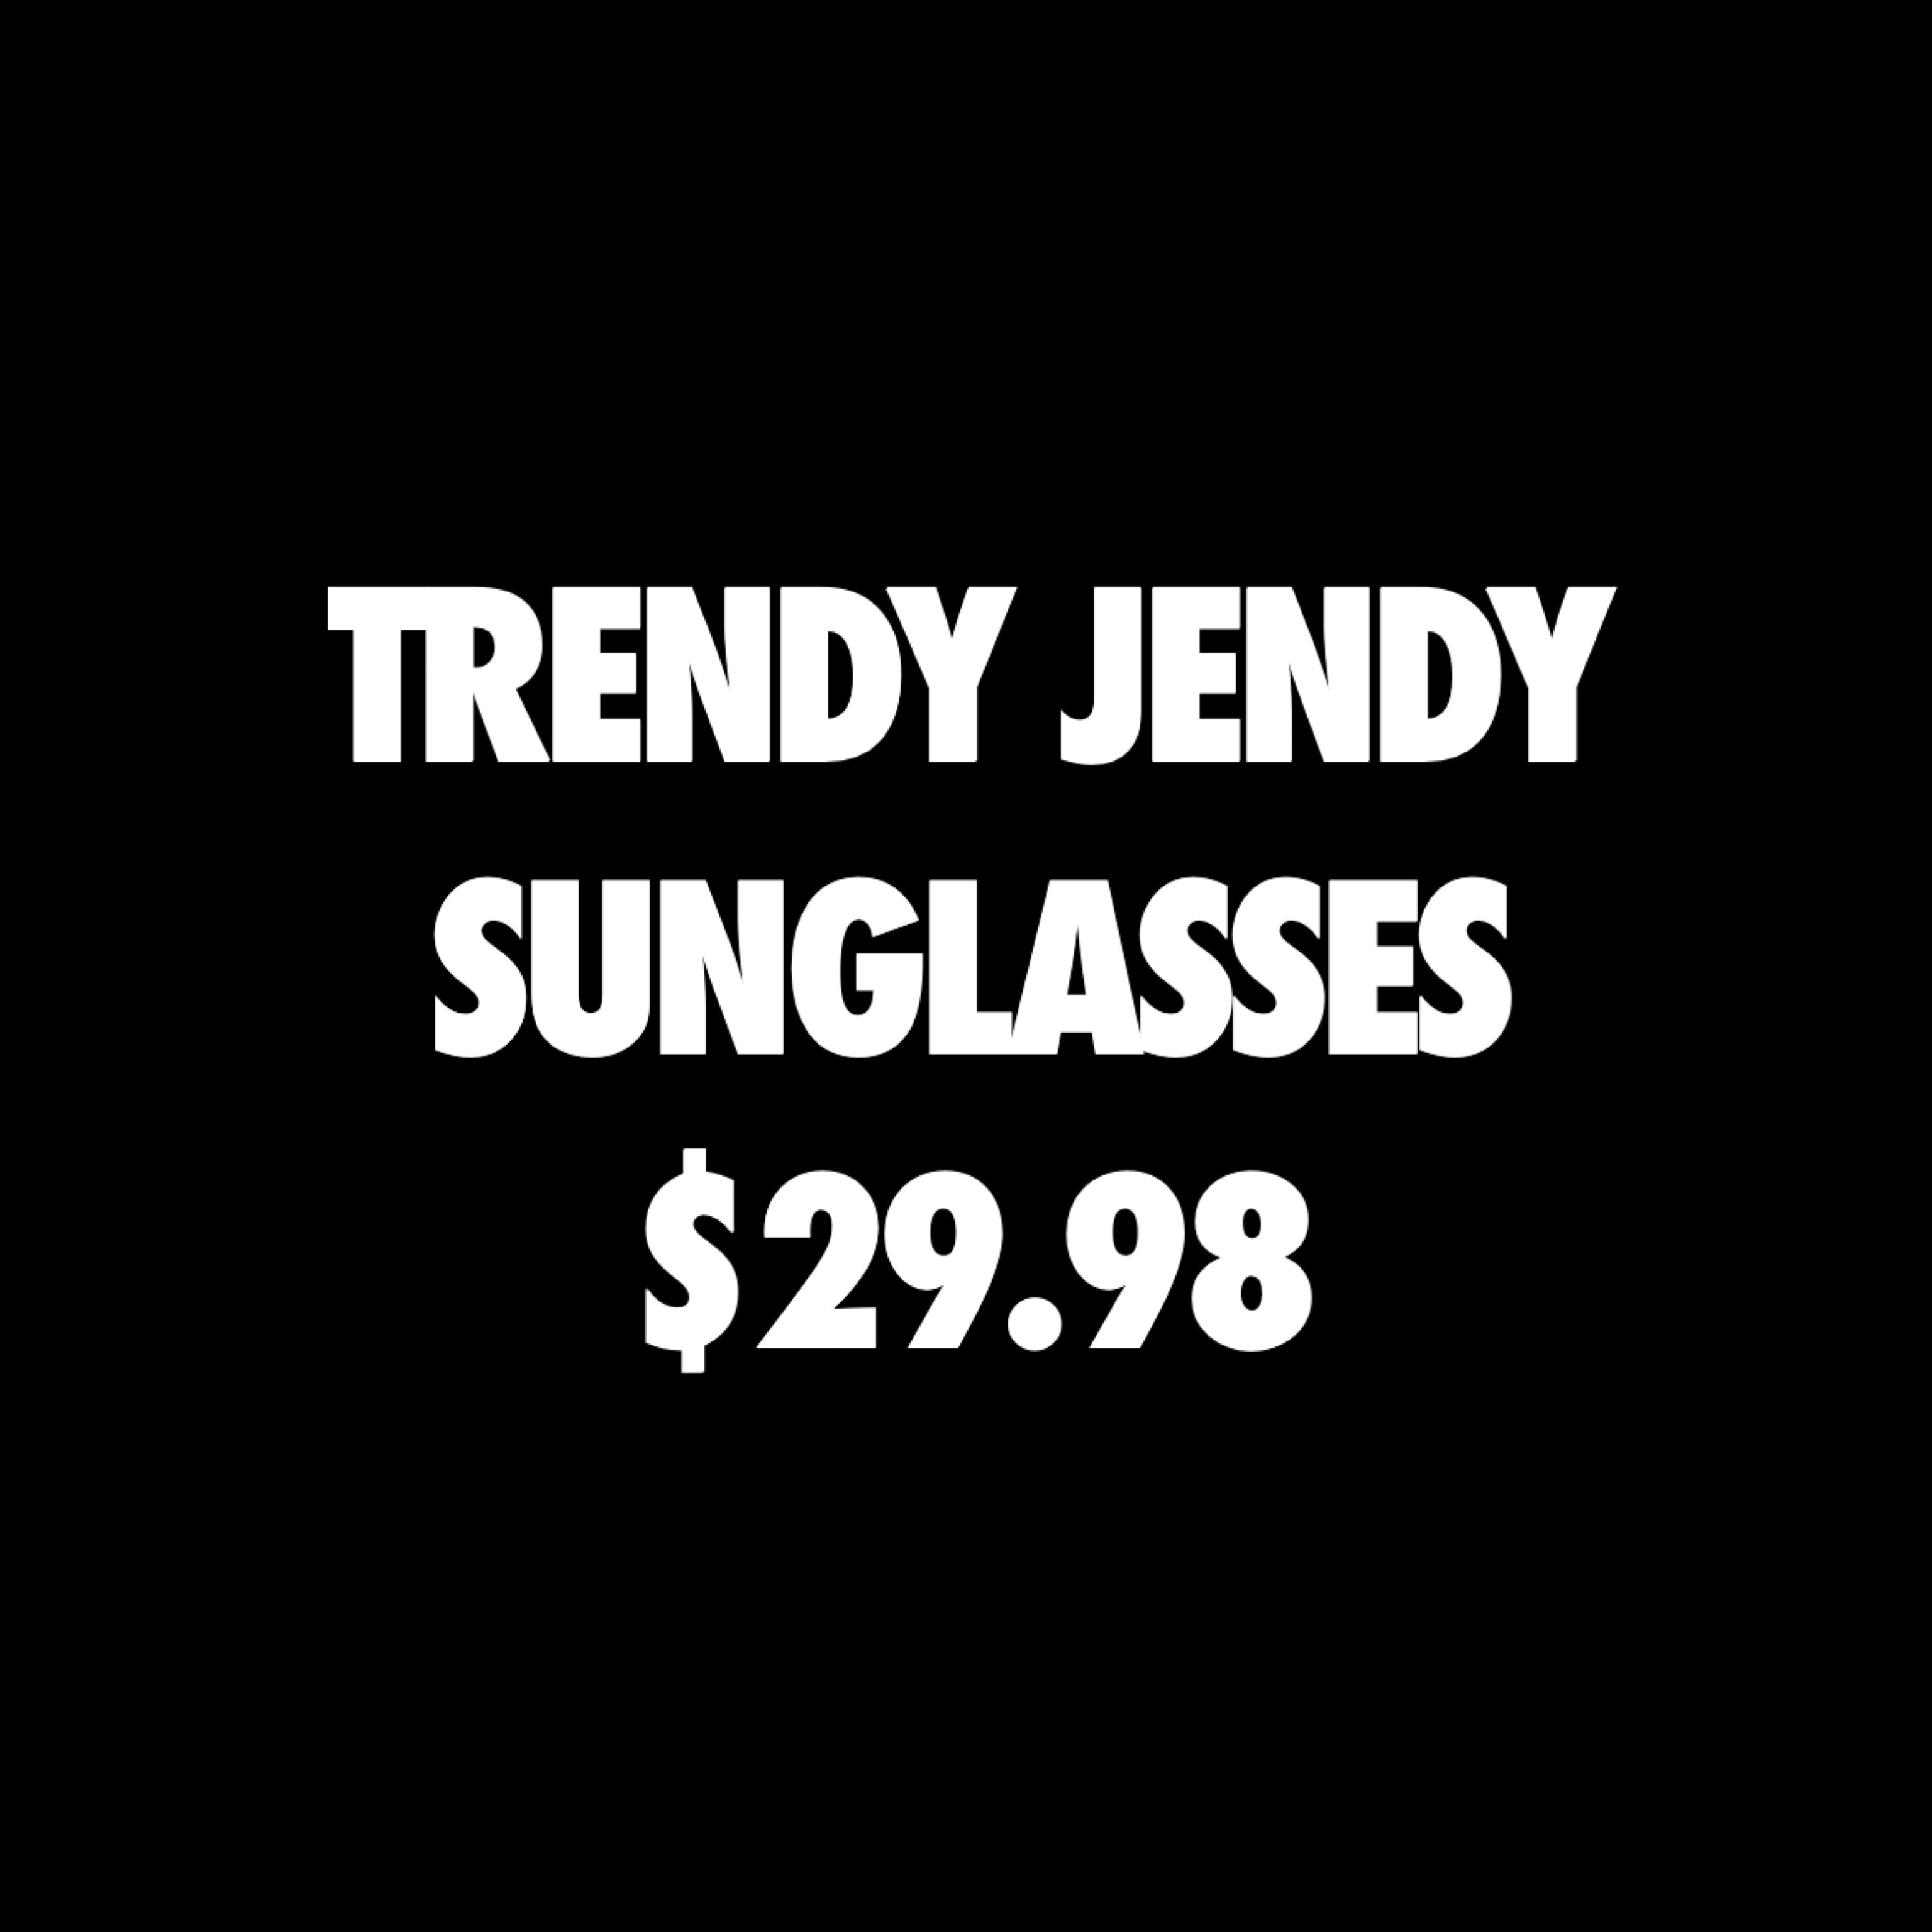 Trendy Jendy Sunglasses